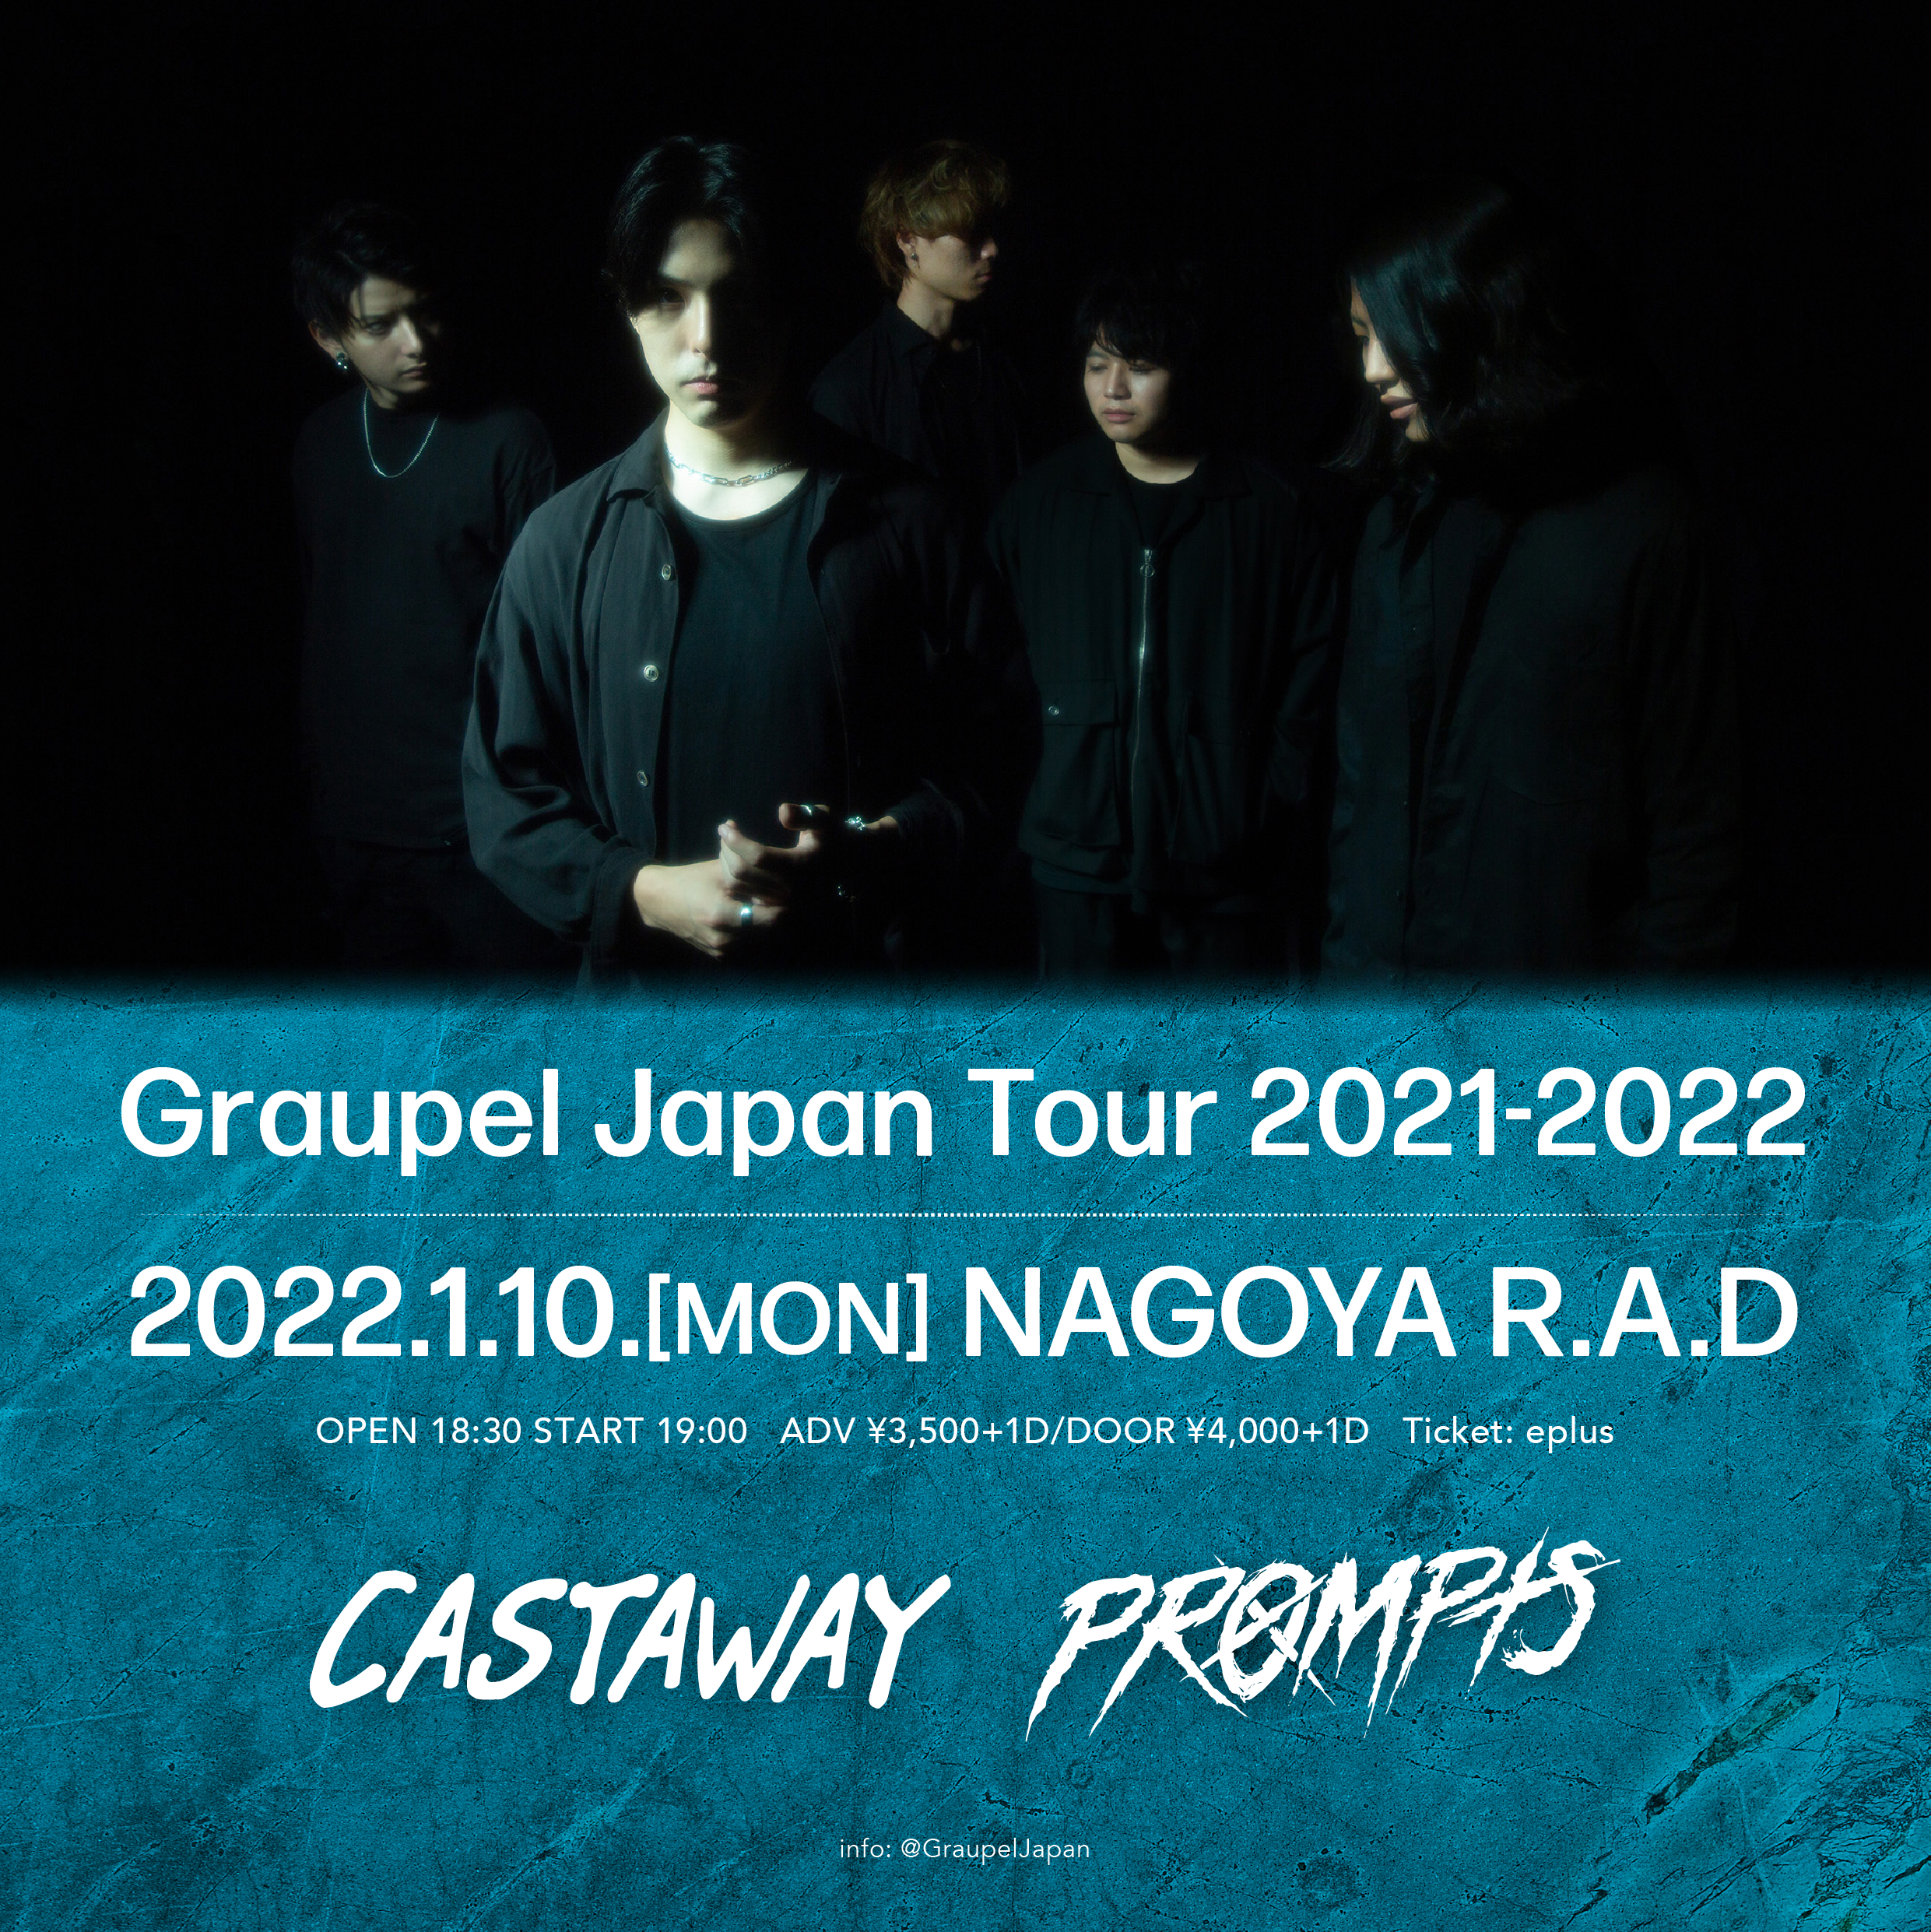 Graupel JAPAN TOUR 2021